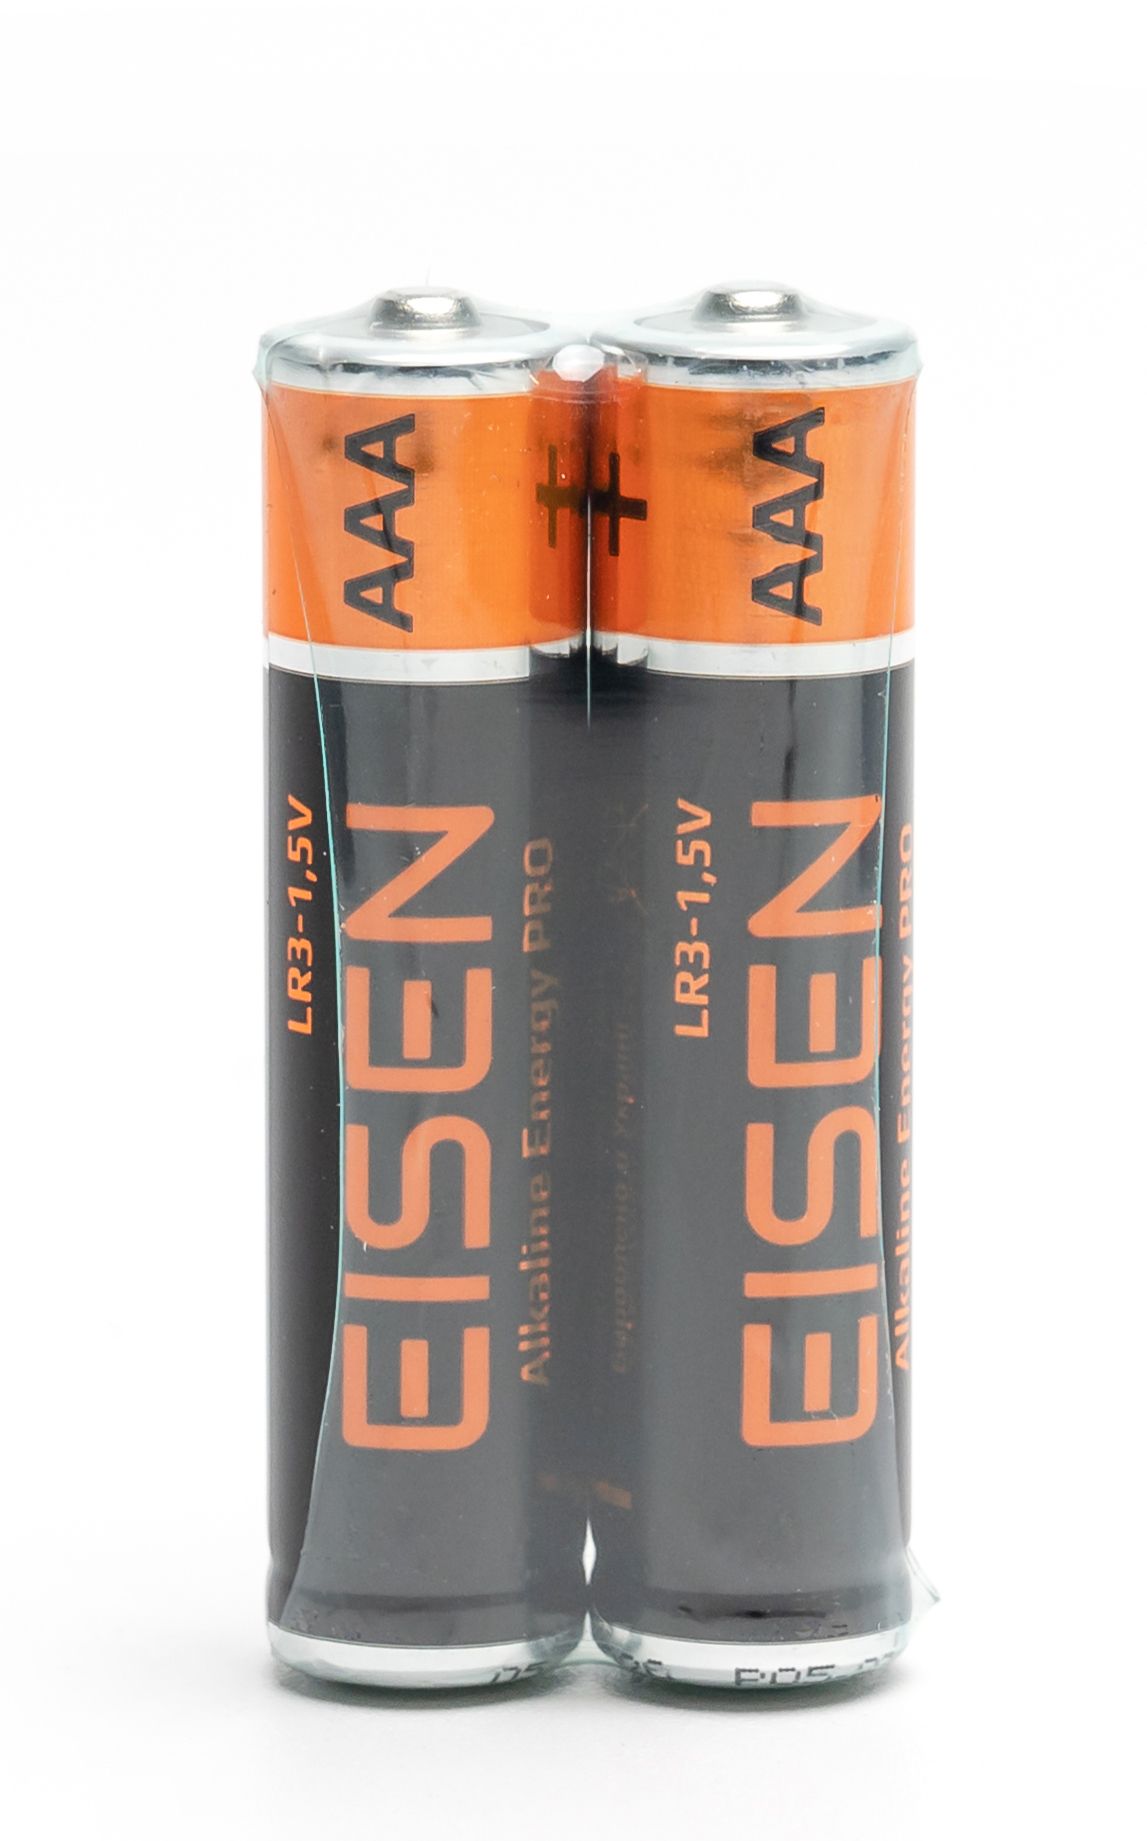 Батарейка Eisen Energy Alkaline PRO LR03 (AAA) спайка 2шт. в Запорожье